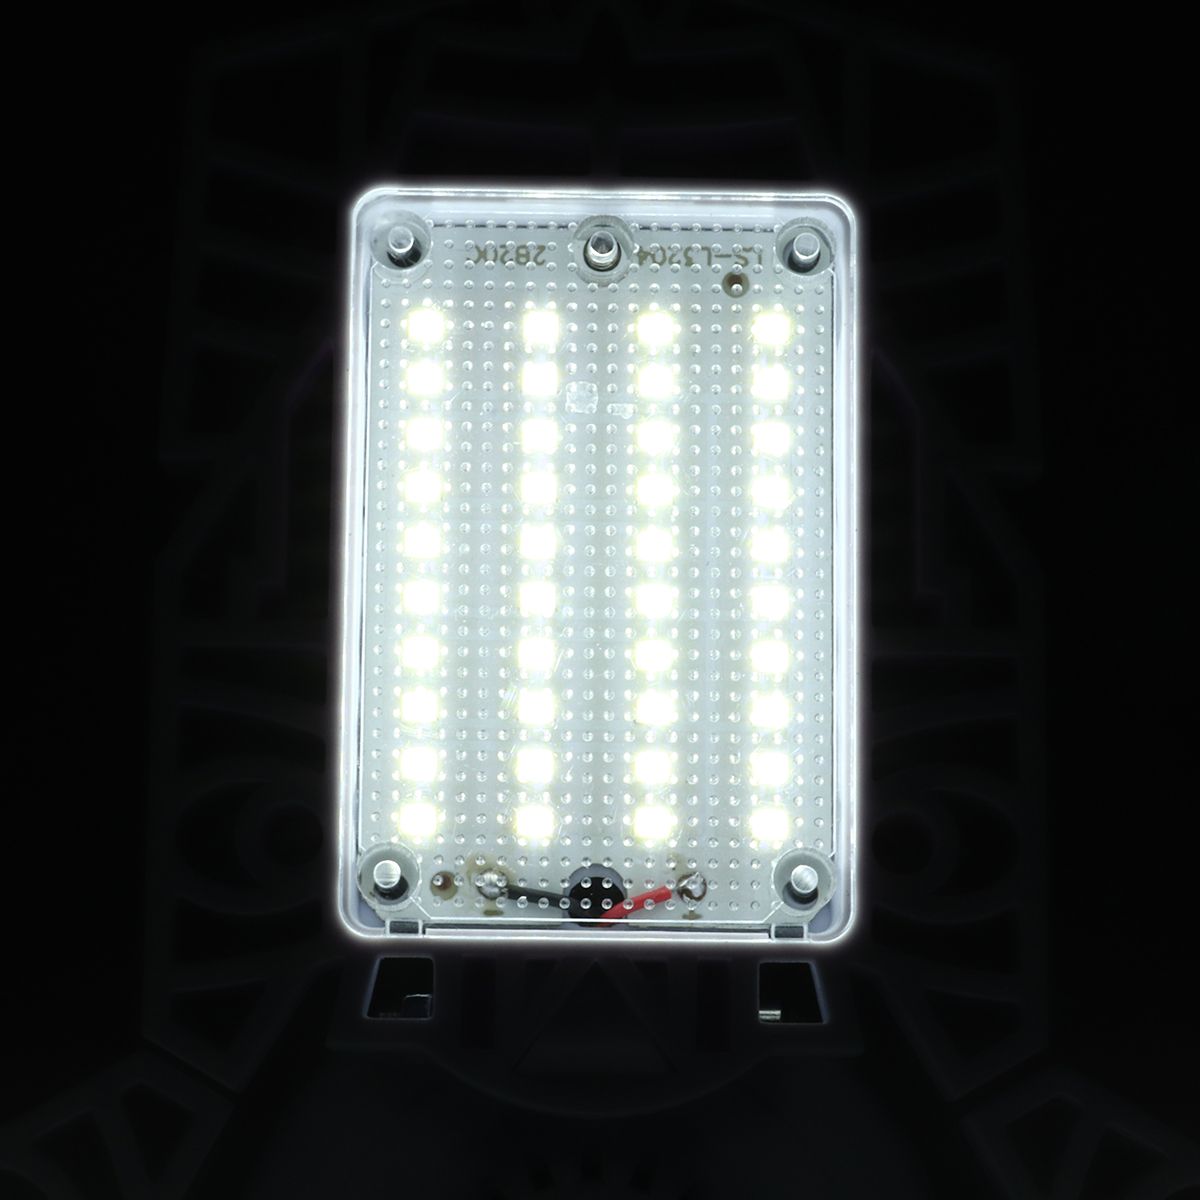 AC85-265V-60W-E27-LED-Garage-Light-Bulb-SMD2835-Foldable-Super-Bright-Adjustable-Ceiling-Lamp-1688927